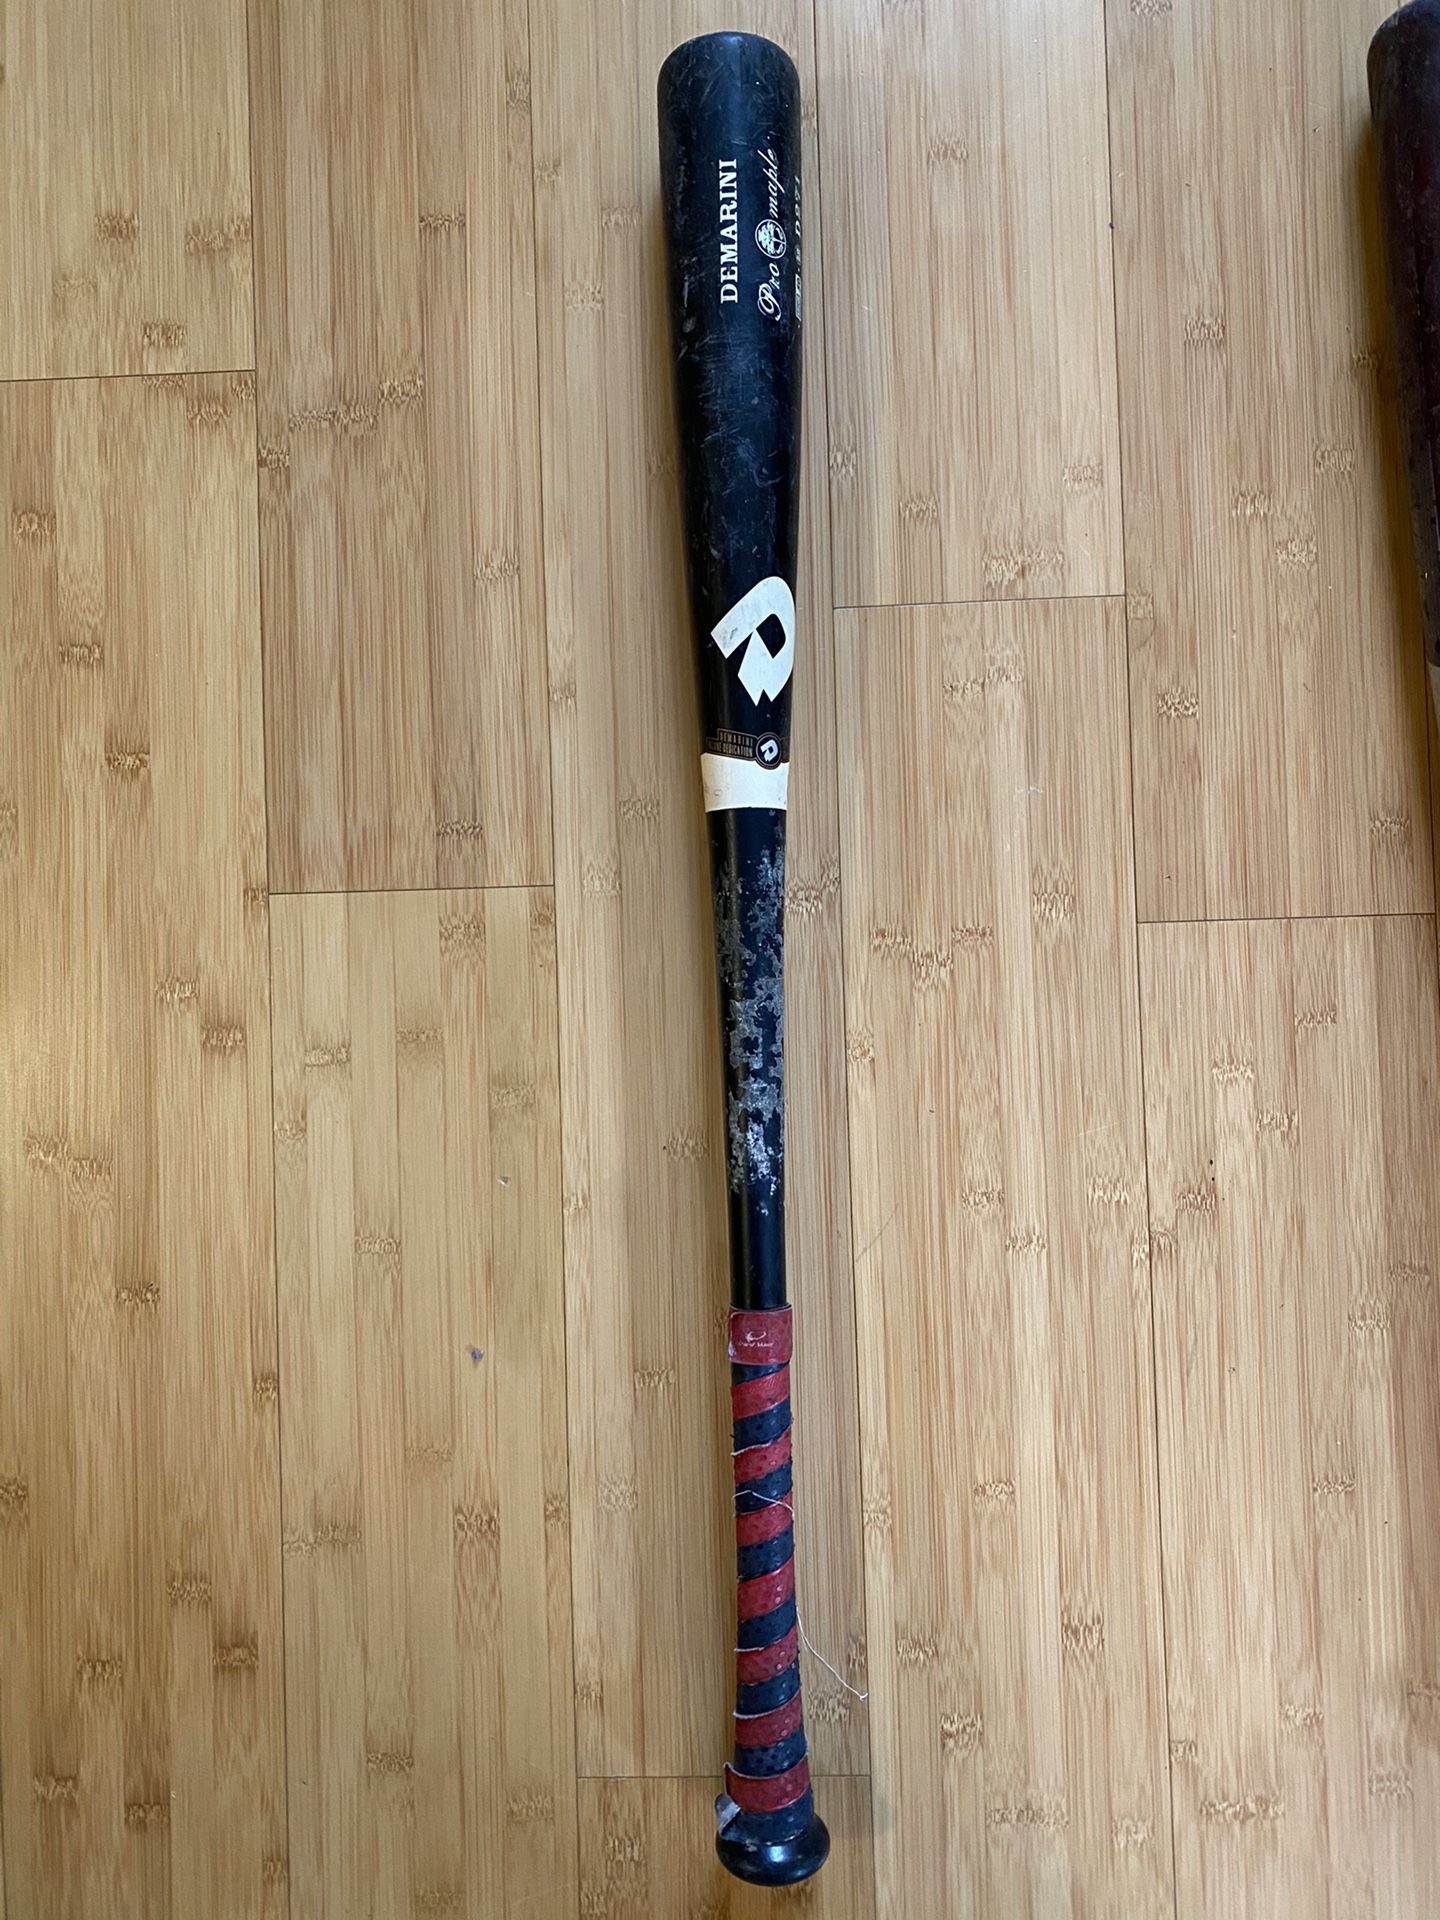 BBCOR DeMarini D271 Pro Maple 31” Wood Baseball Bat